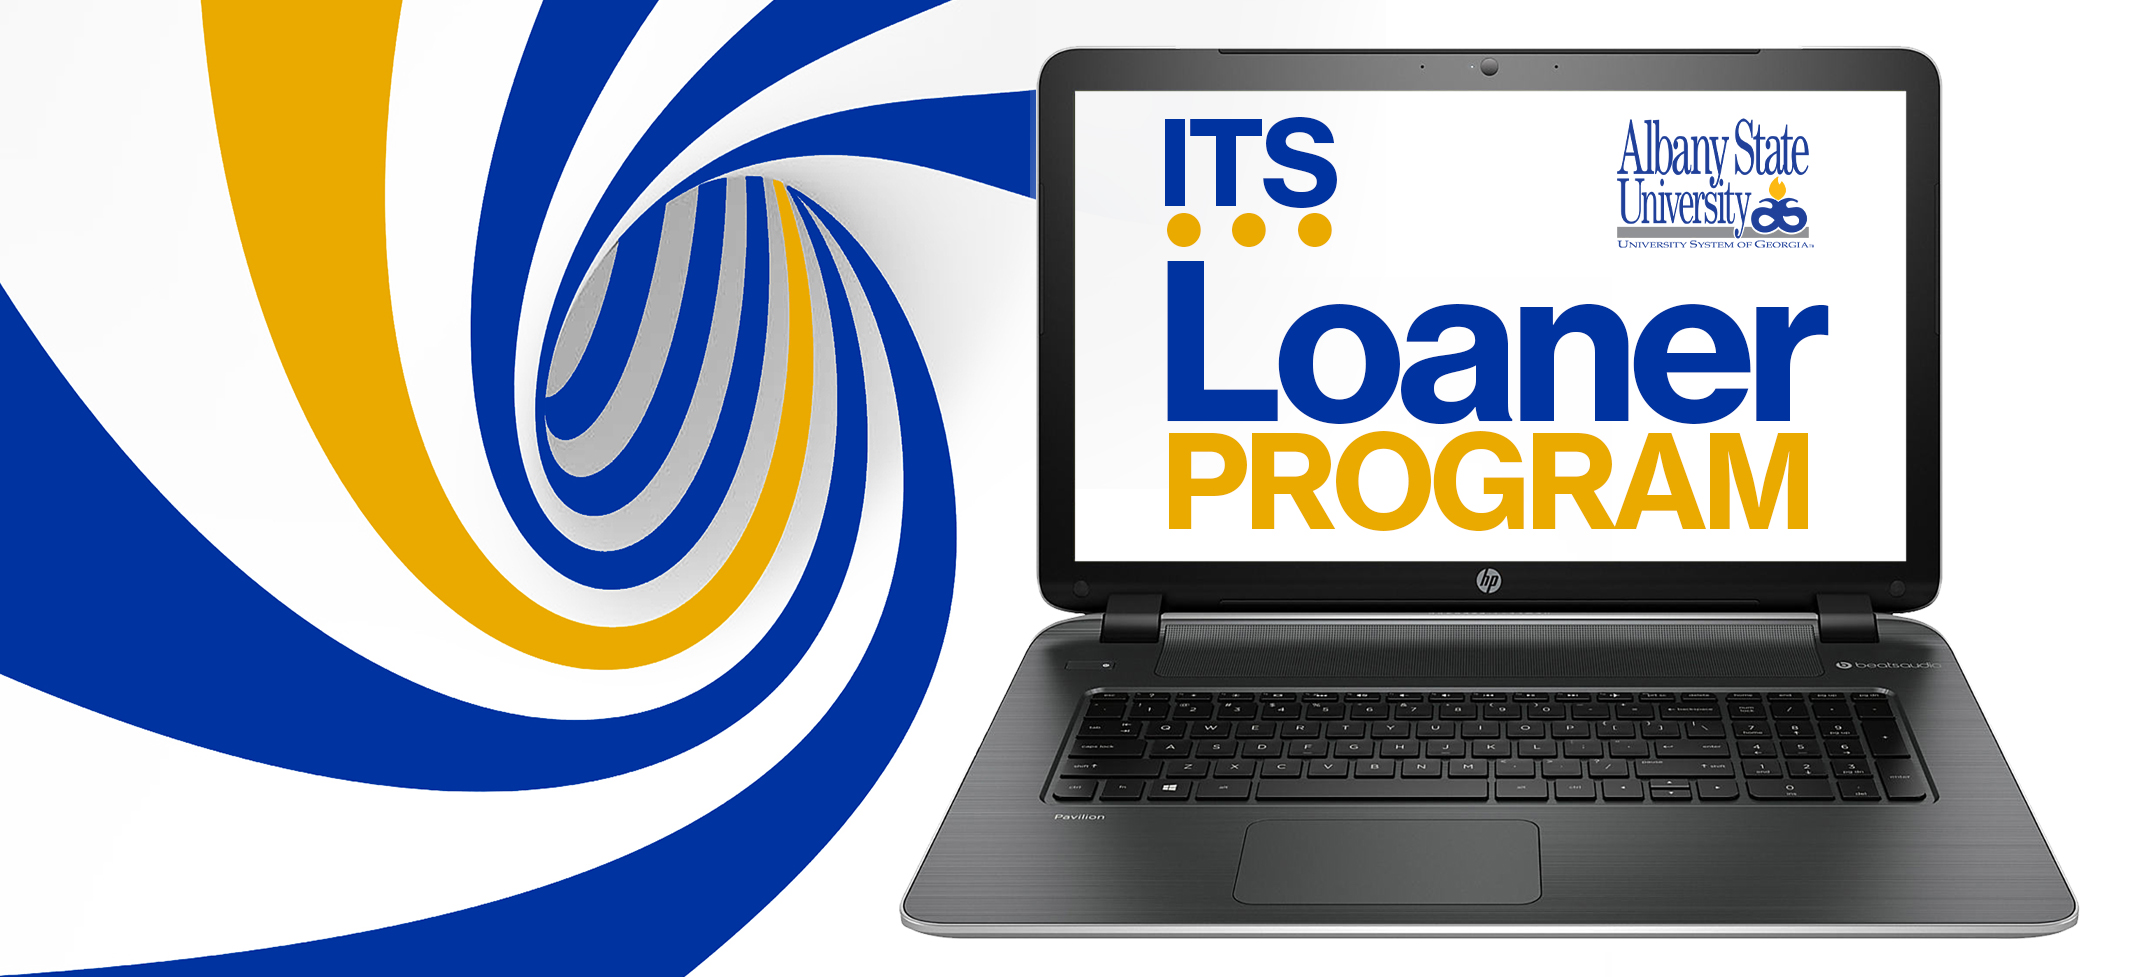 ITS Loaner Program